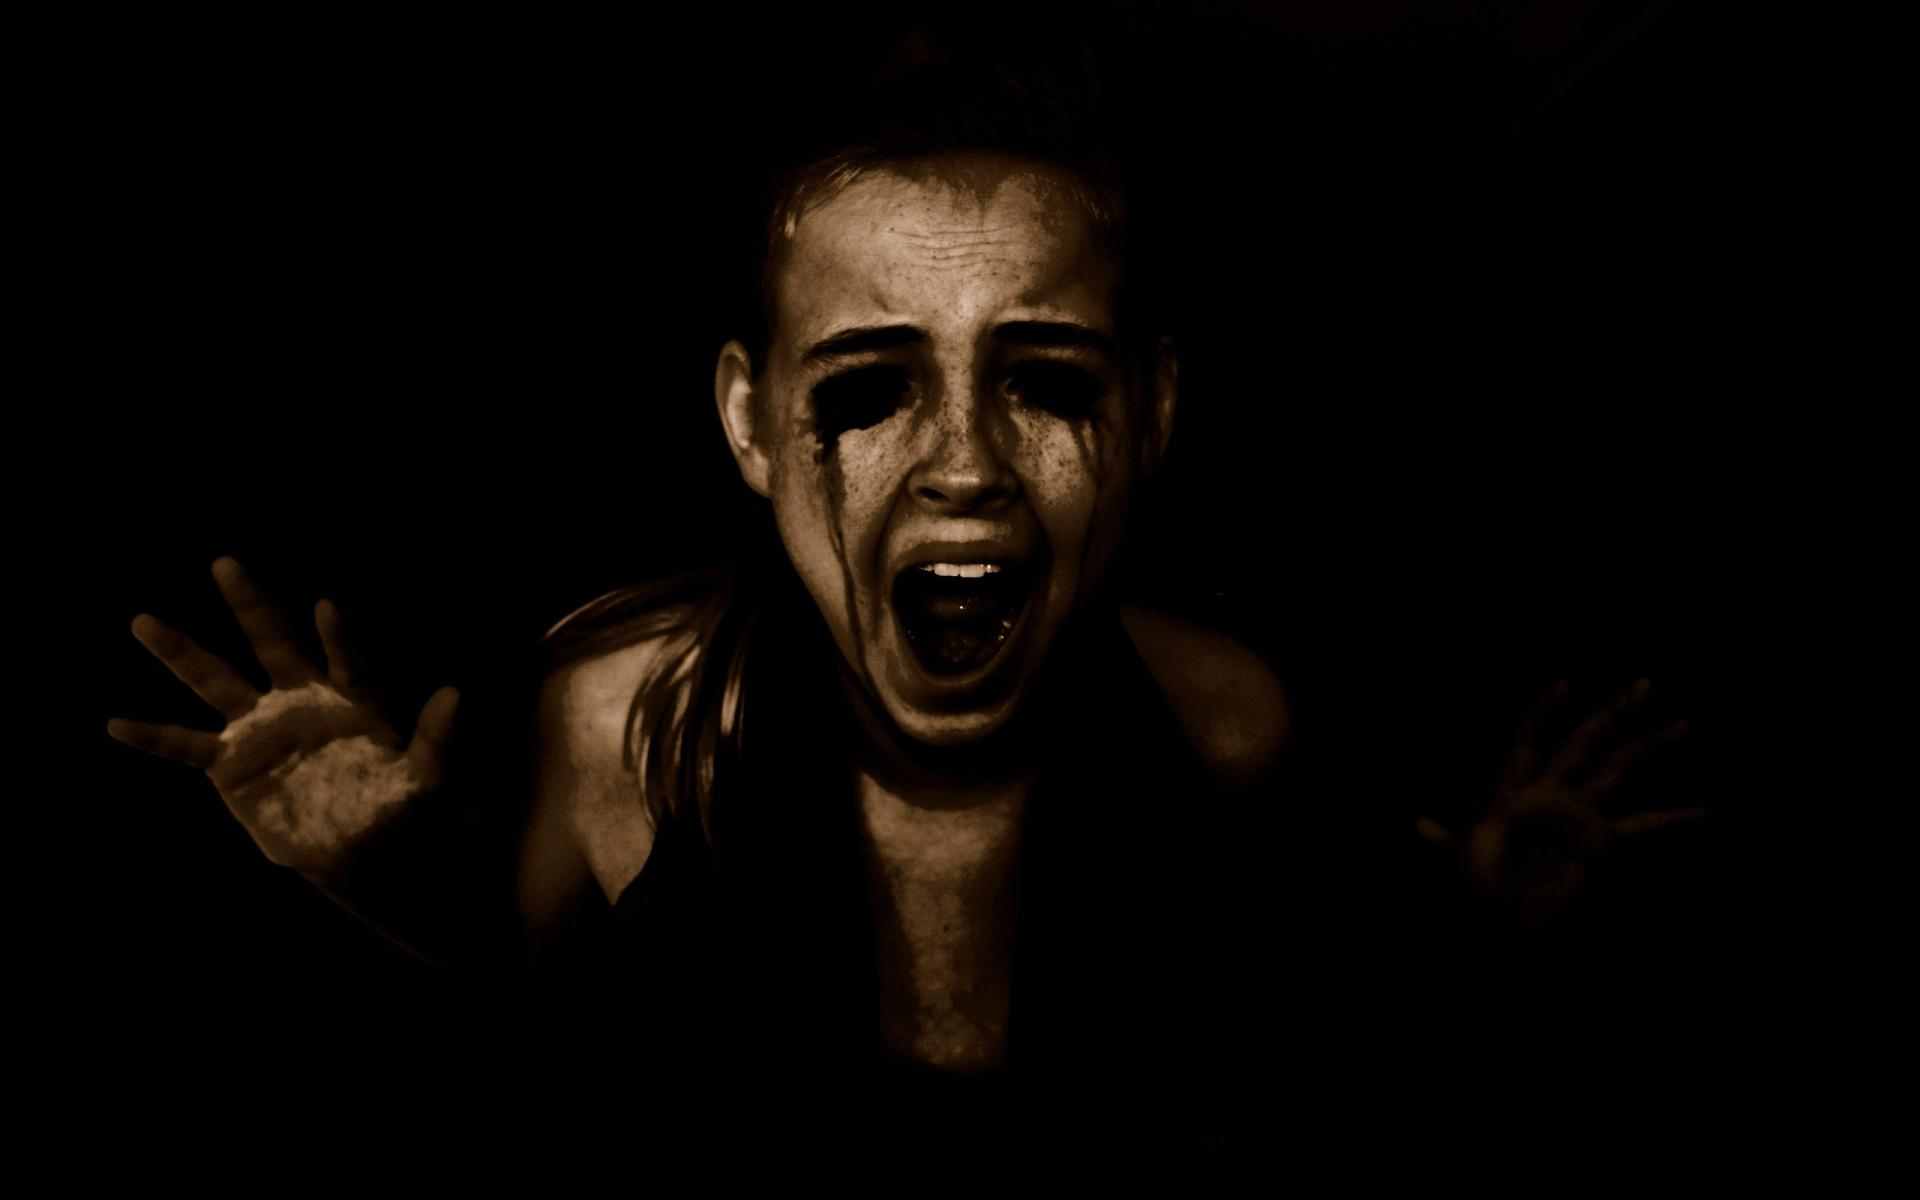 dark-horror-evil-scary-creepy-spooky-halloween-women-girls-blood-demons-face-mood-scream-emotion.jpg